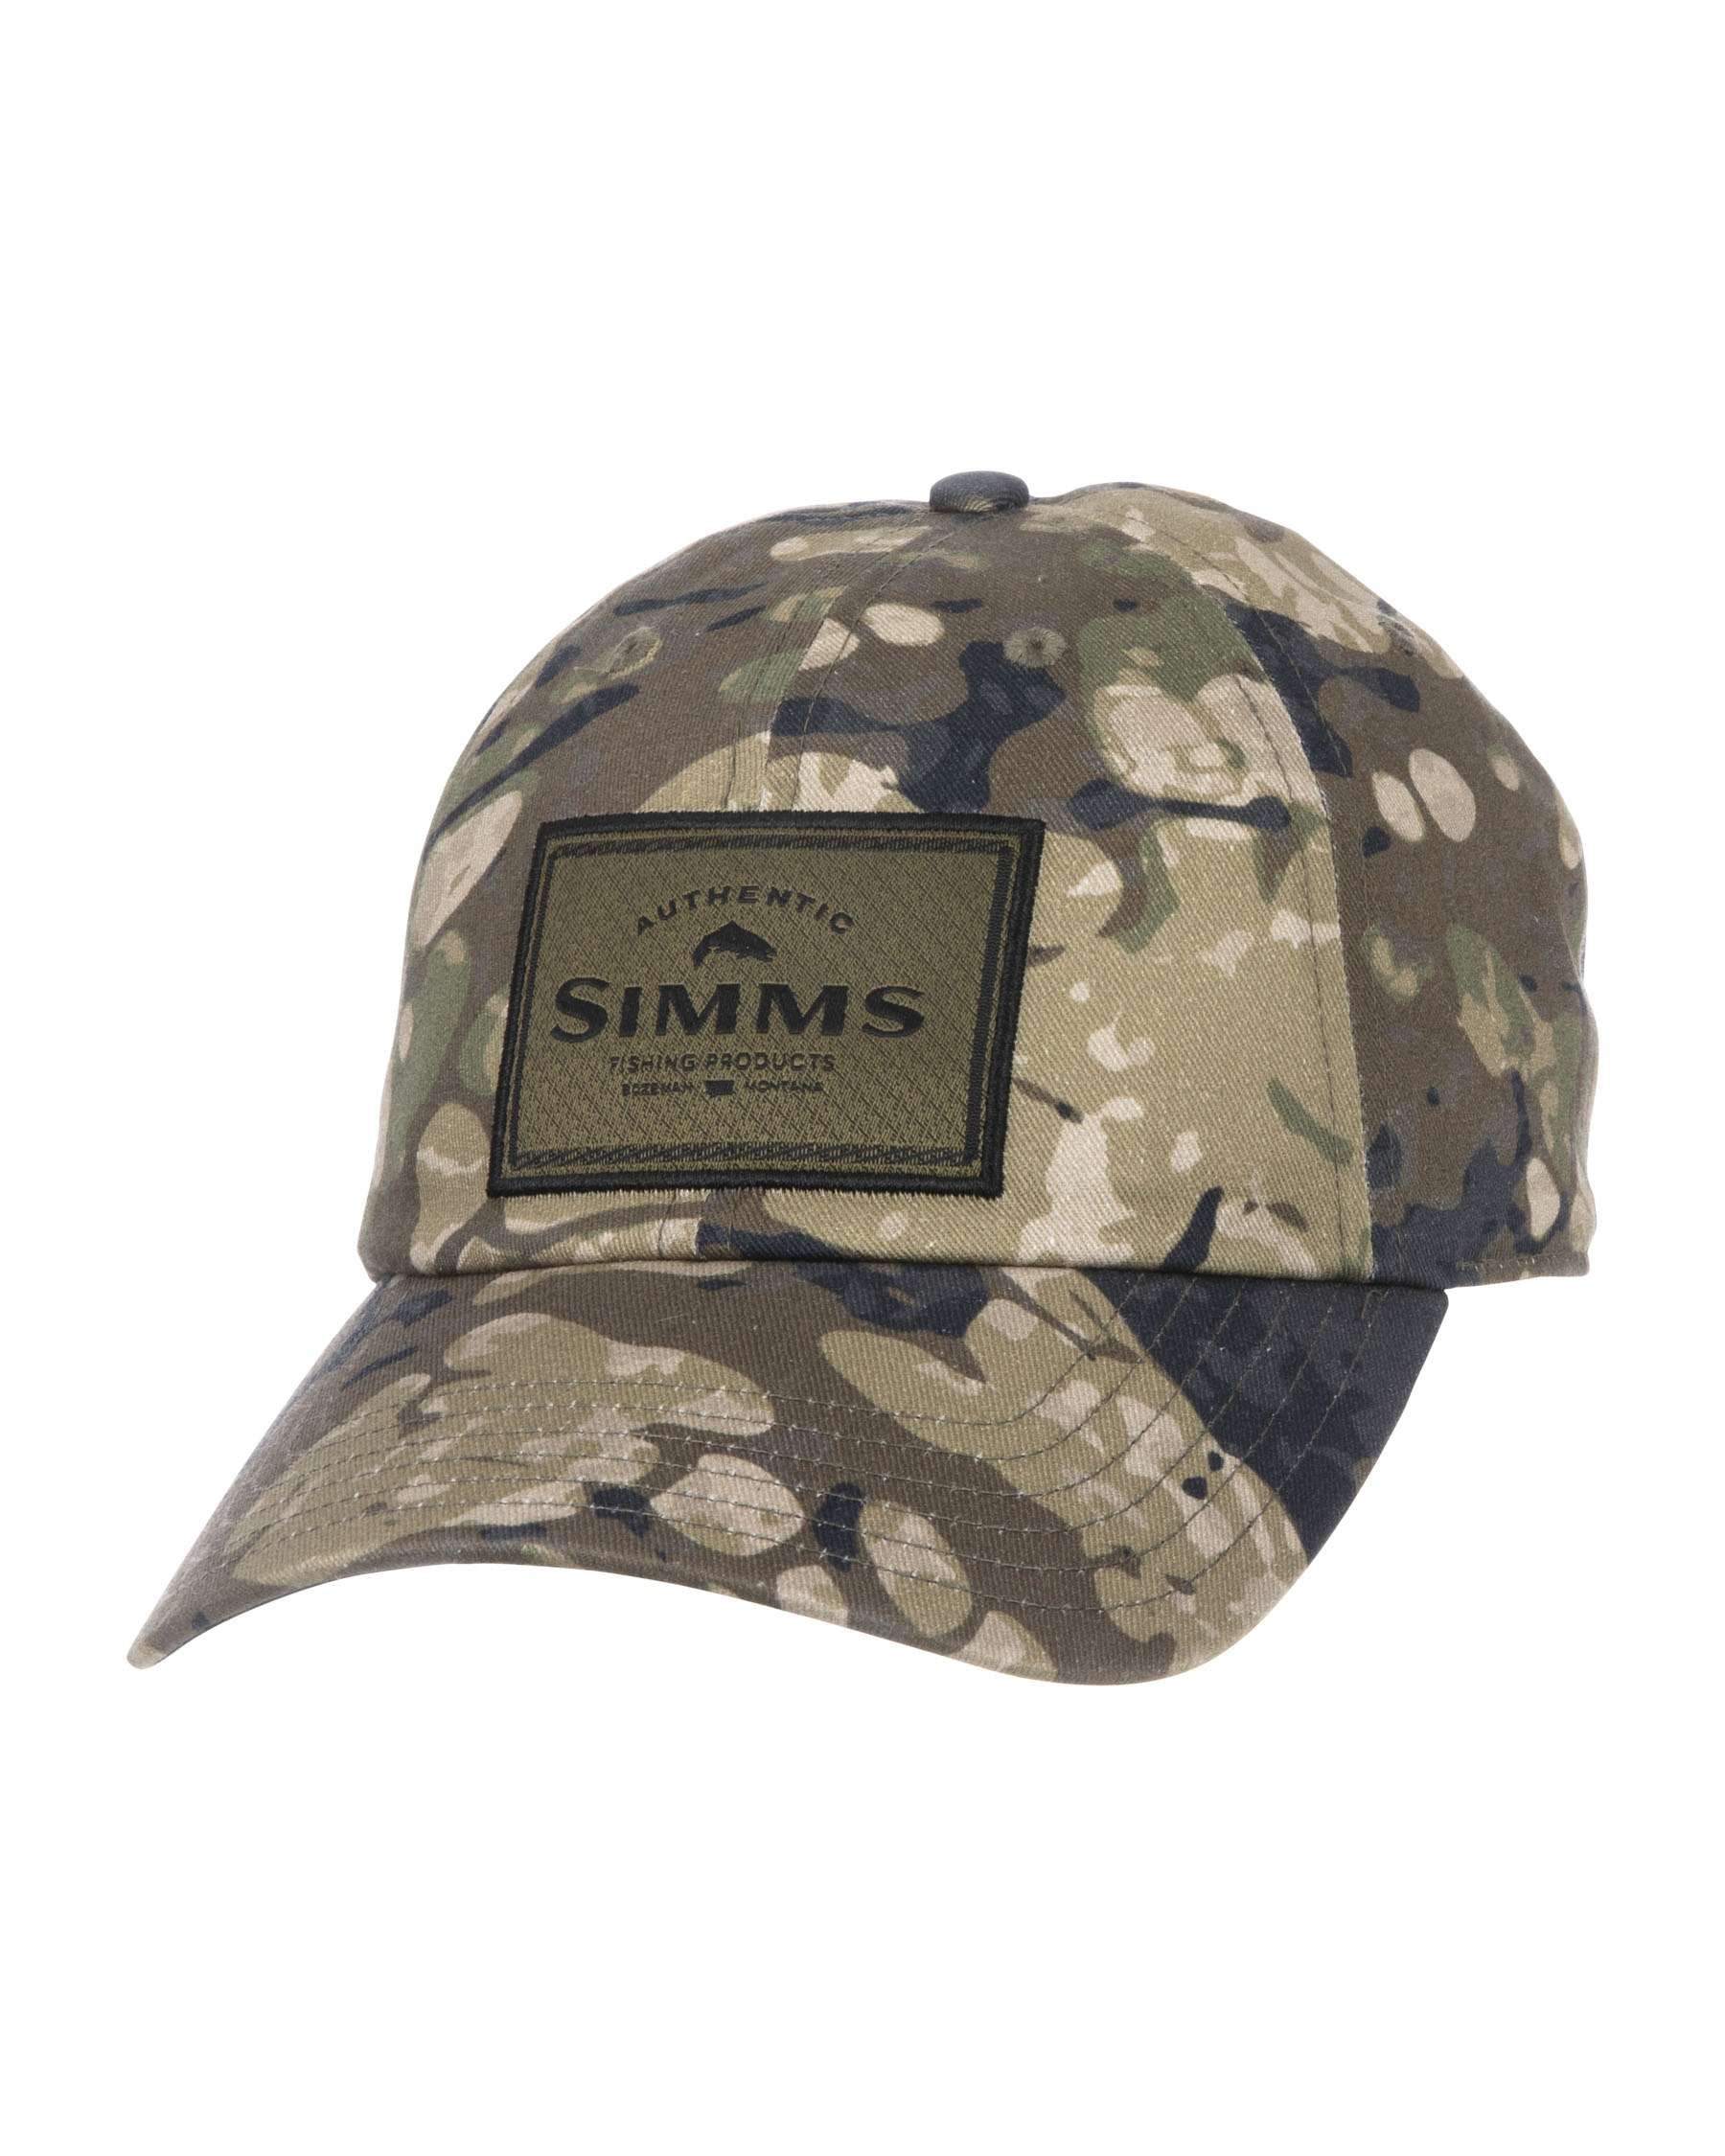 Simms Single Haul Cap - OSFM / RIPARIAN CAMO - Mansfield Hunting & Fishing - Products to prepare for Corona Virus